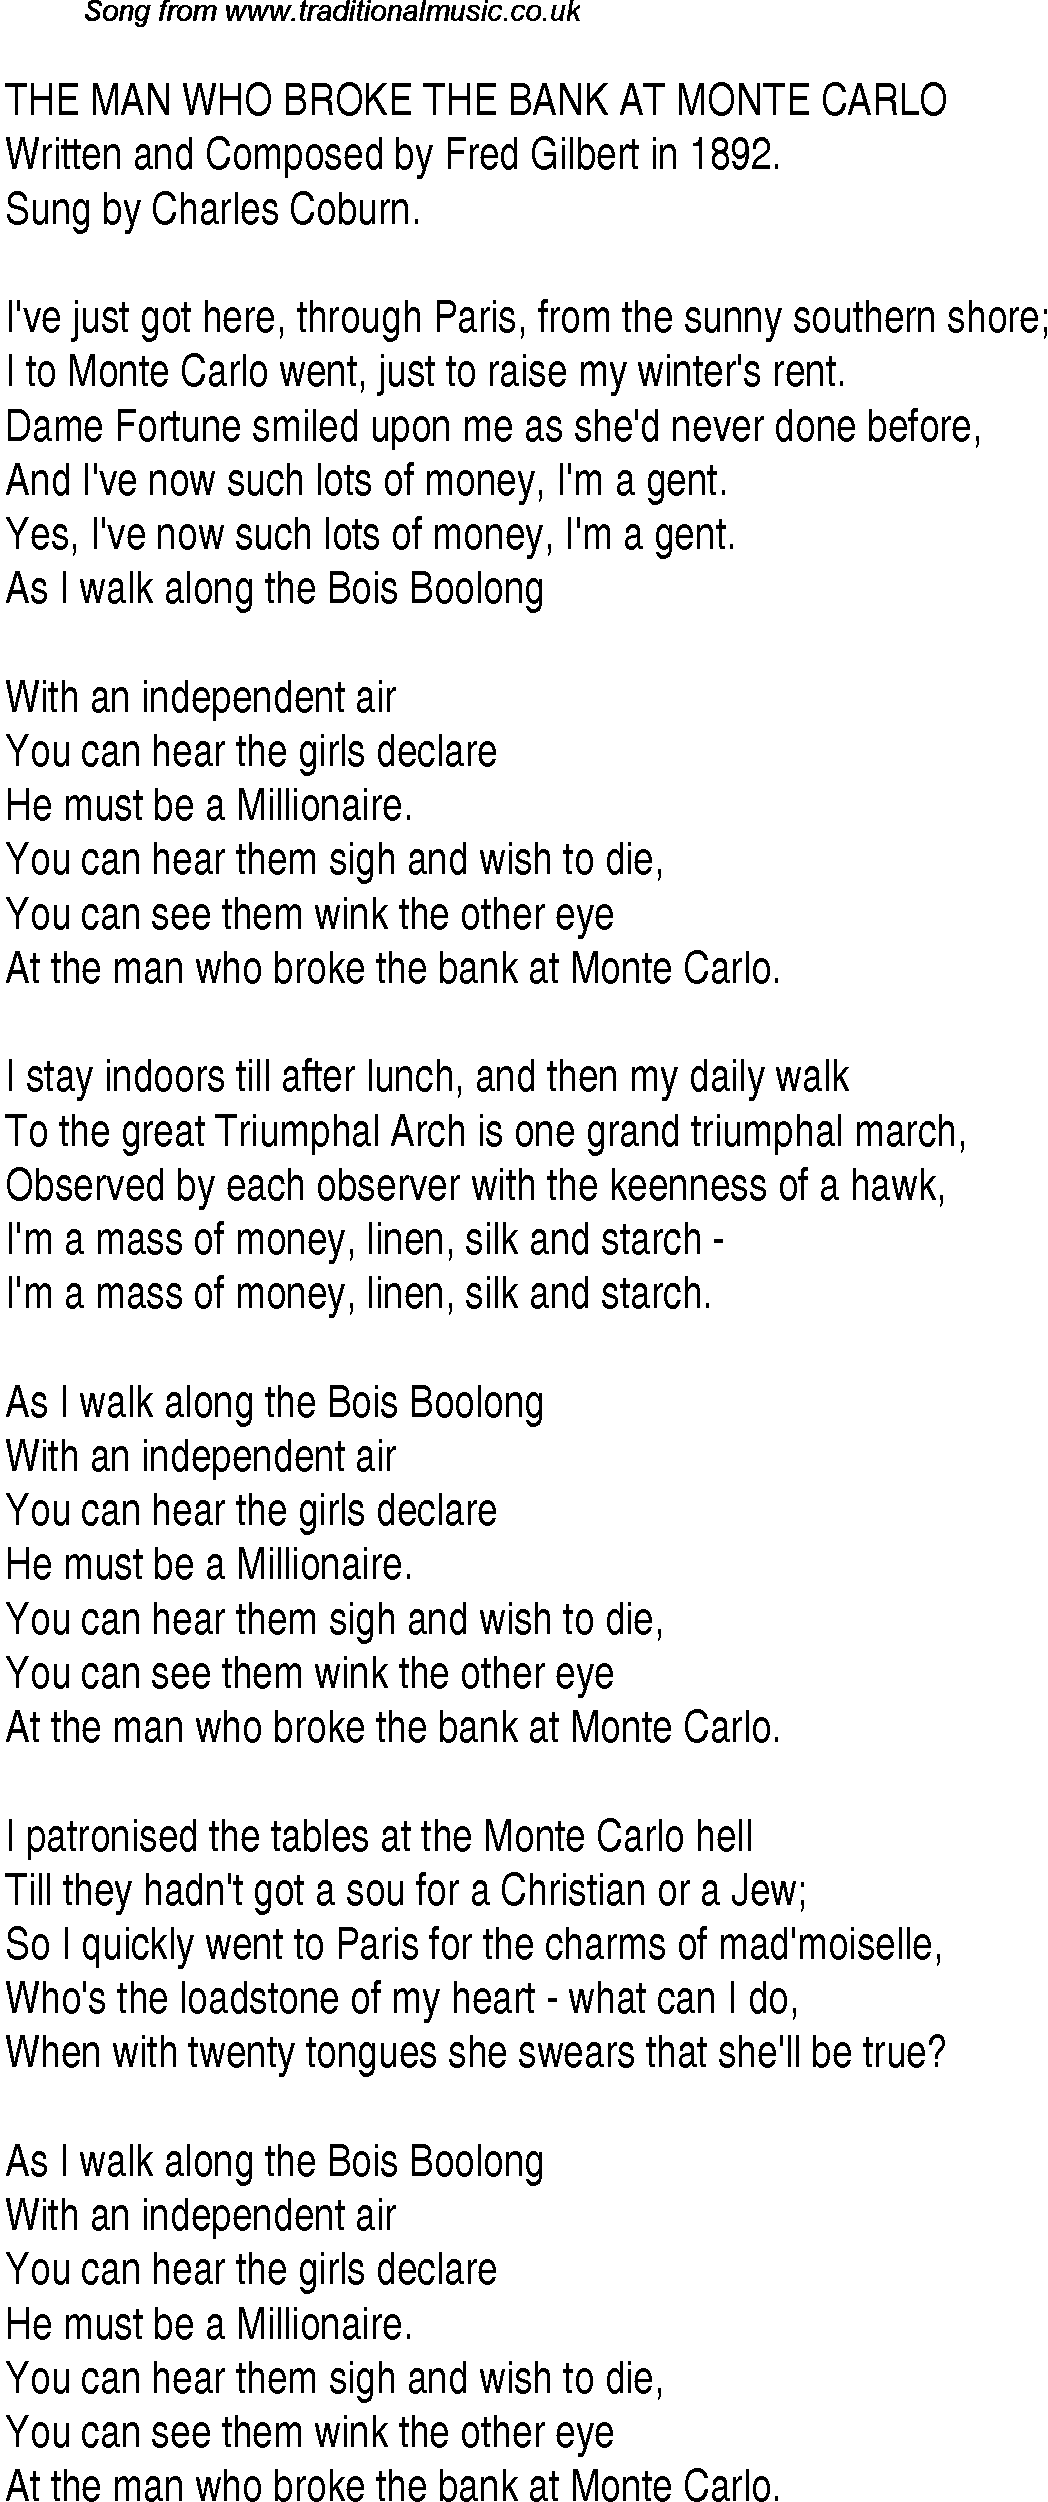 1940s top songs - lyrics for Man Who Broke Bank Monte Carlo